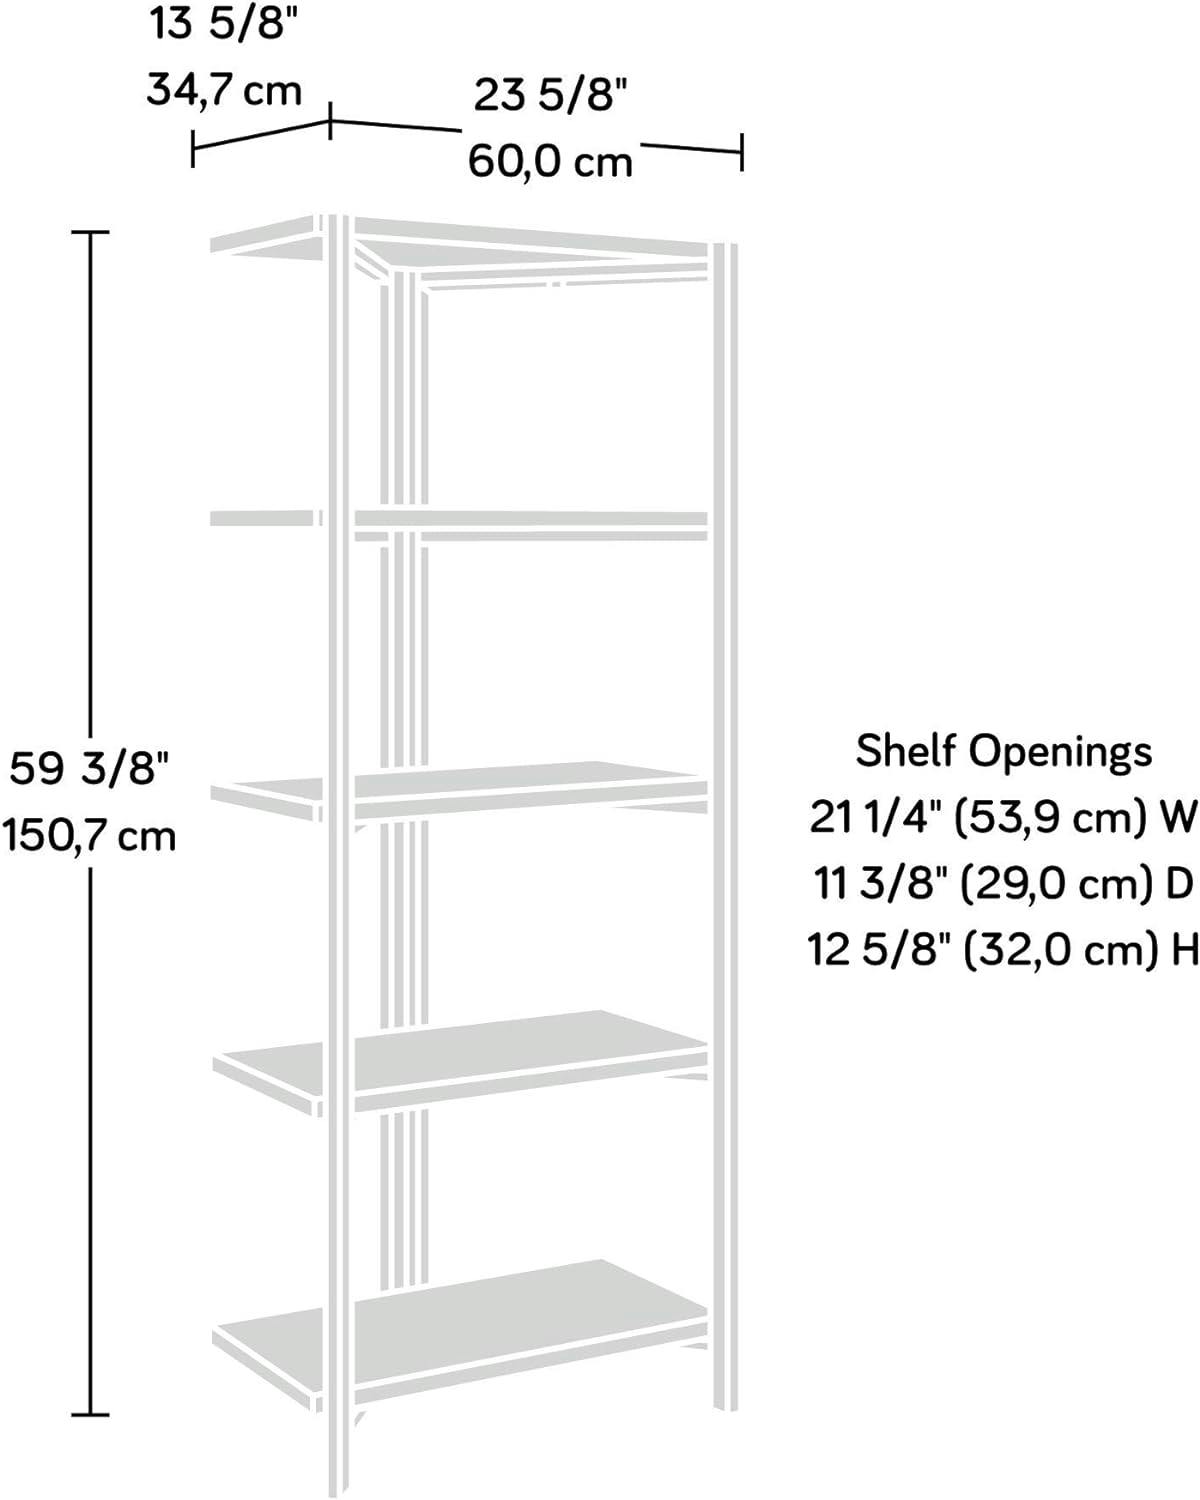 North Avenue Charter Oak 5-Shelf Floor-Standing Bookcase